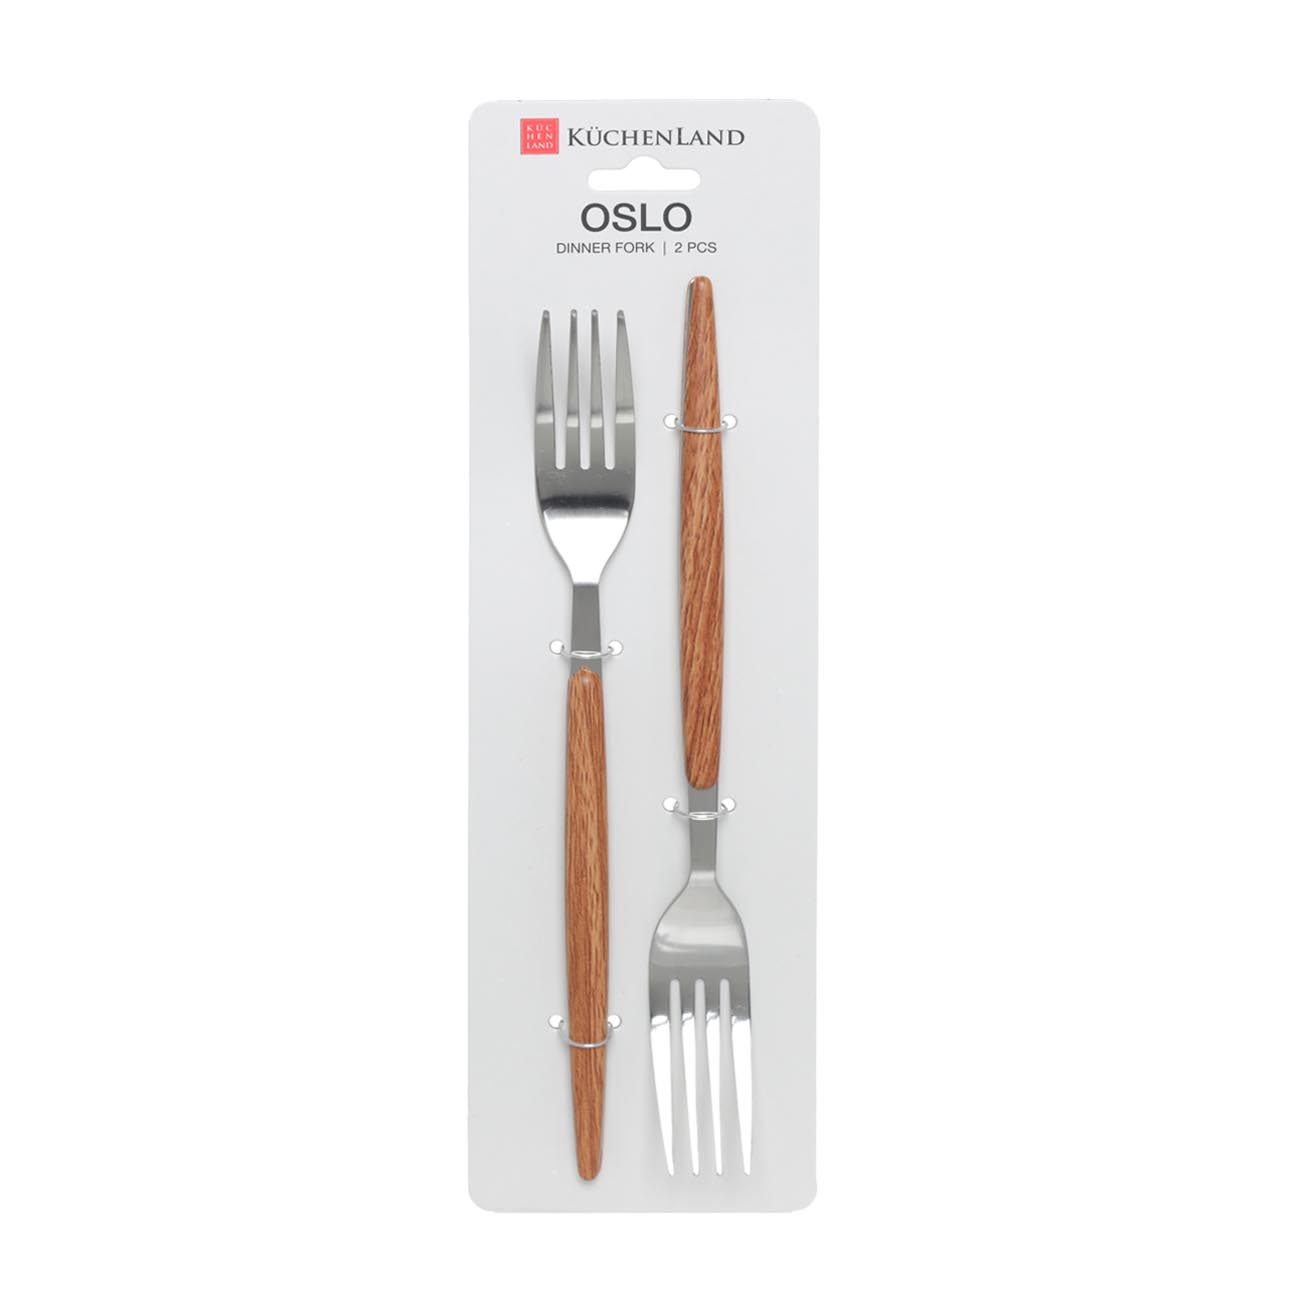 Dining fork, 2 pcs, steel / plastic, brown, Oslo изображение № 2